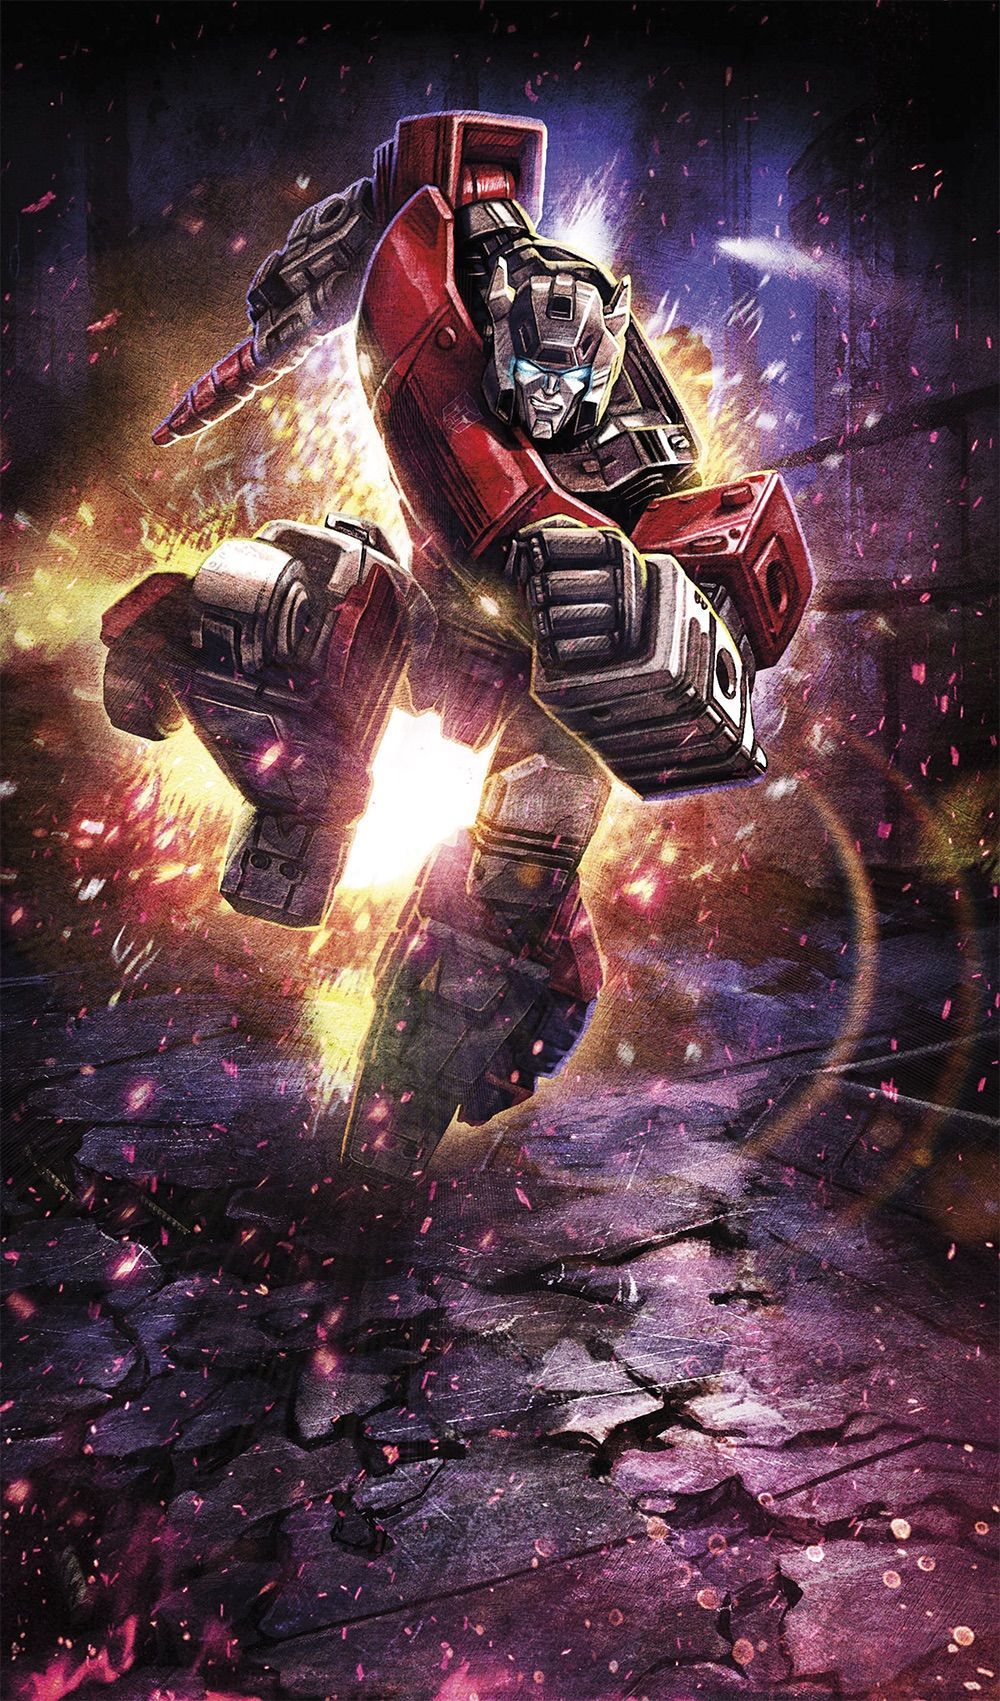 War For Cybertron Trilogy: Siege. Transformers art, Transformers artwork, Transformers